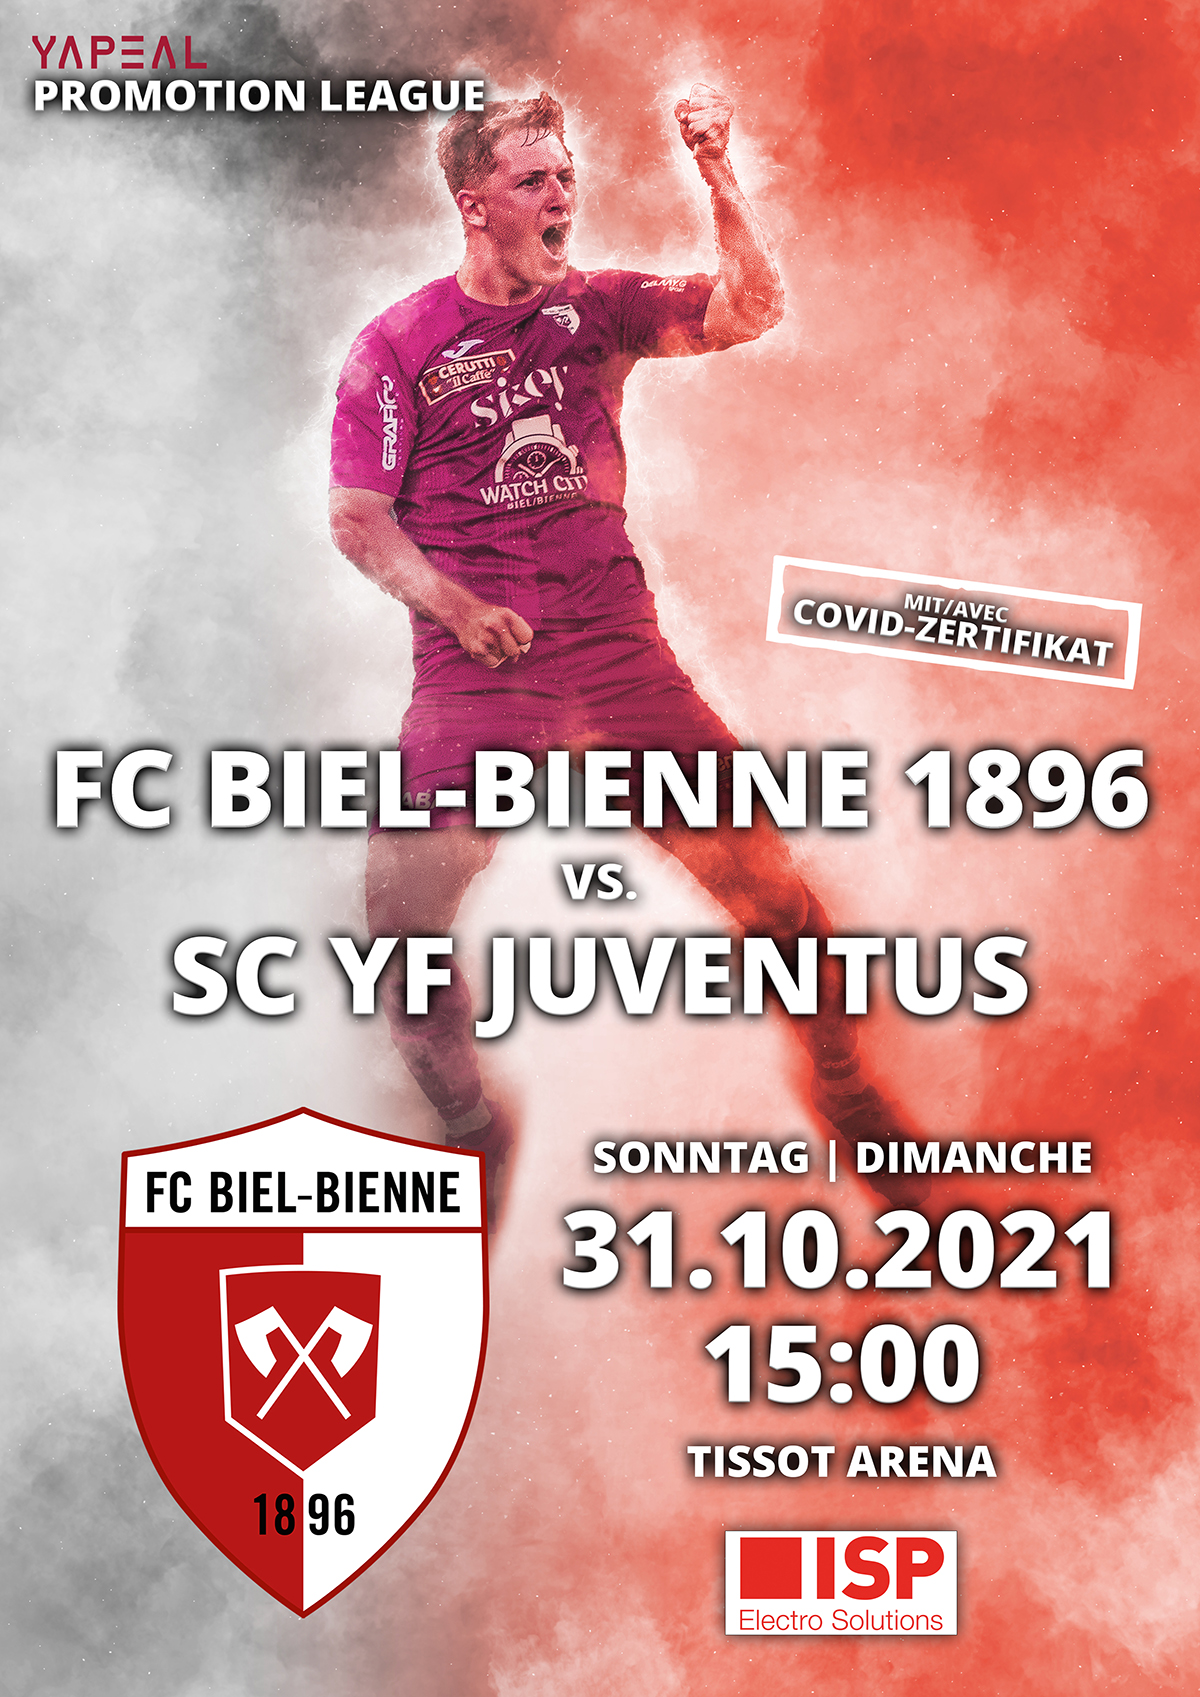 FC Biel-Bienne 1896 vs. SC YF Juventus